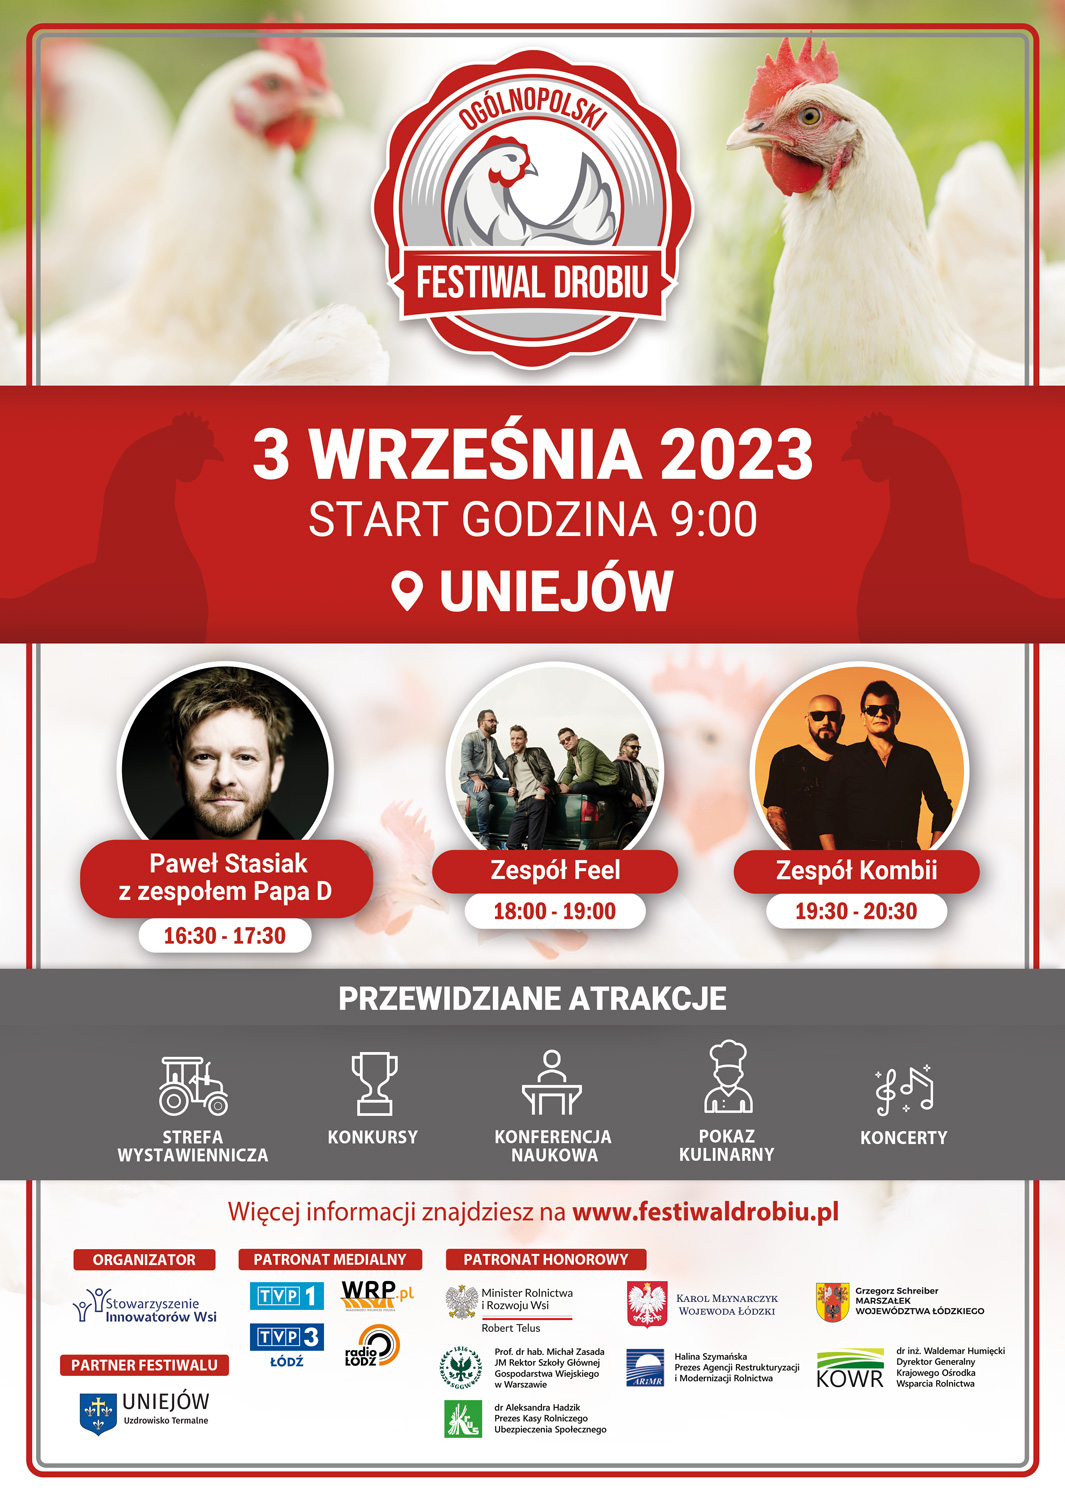 Festiwal drobiu